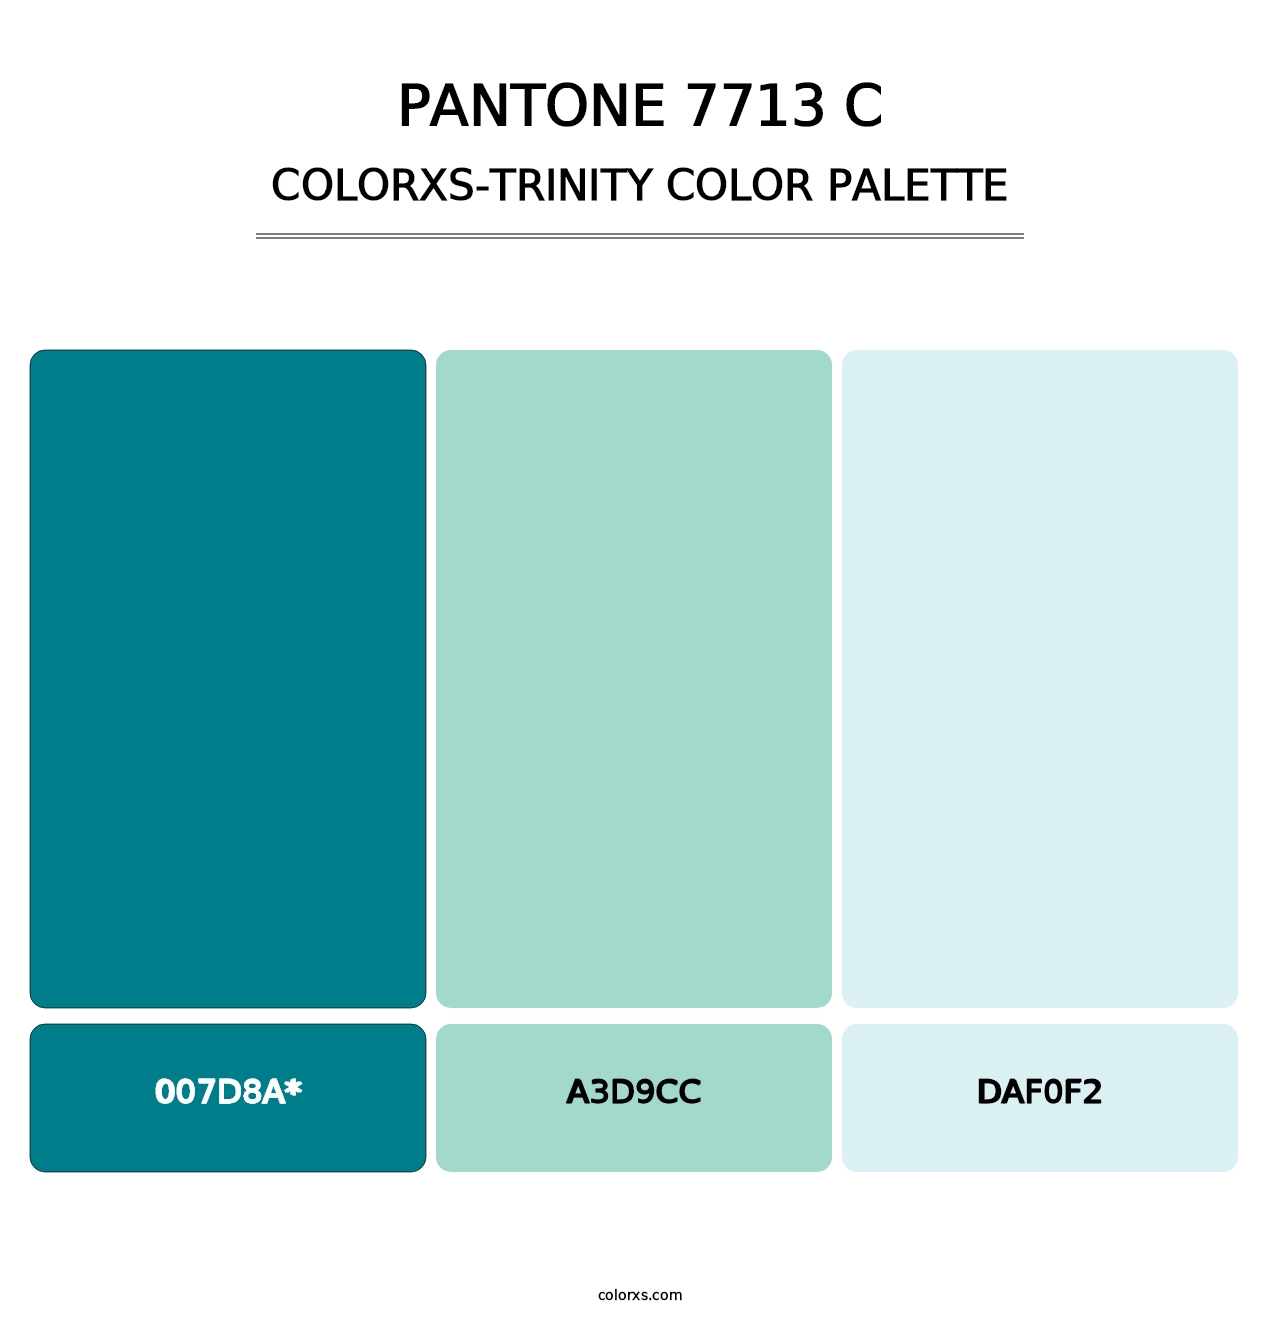 PANTONE 7713 C - Colorxs Trinity Palette